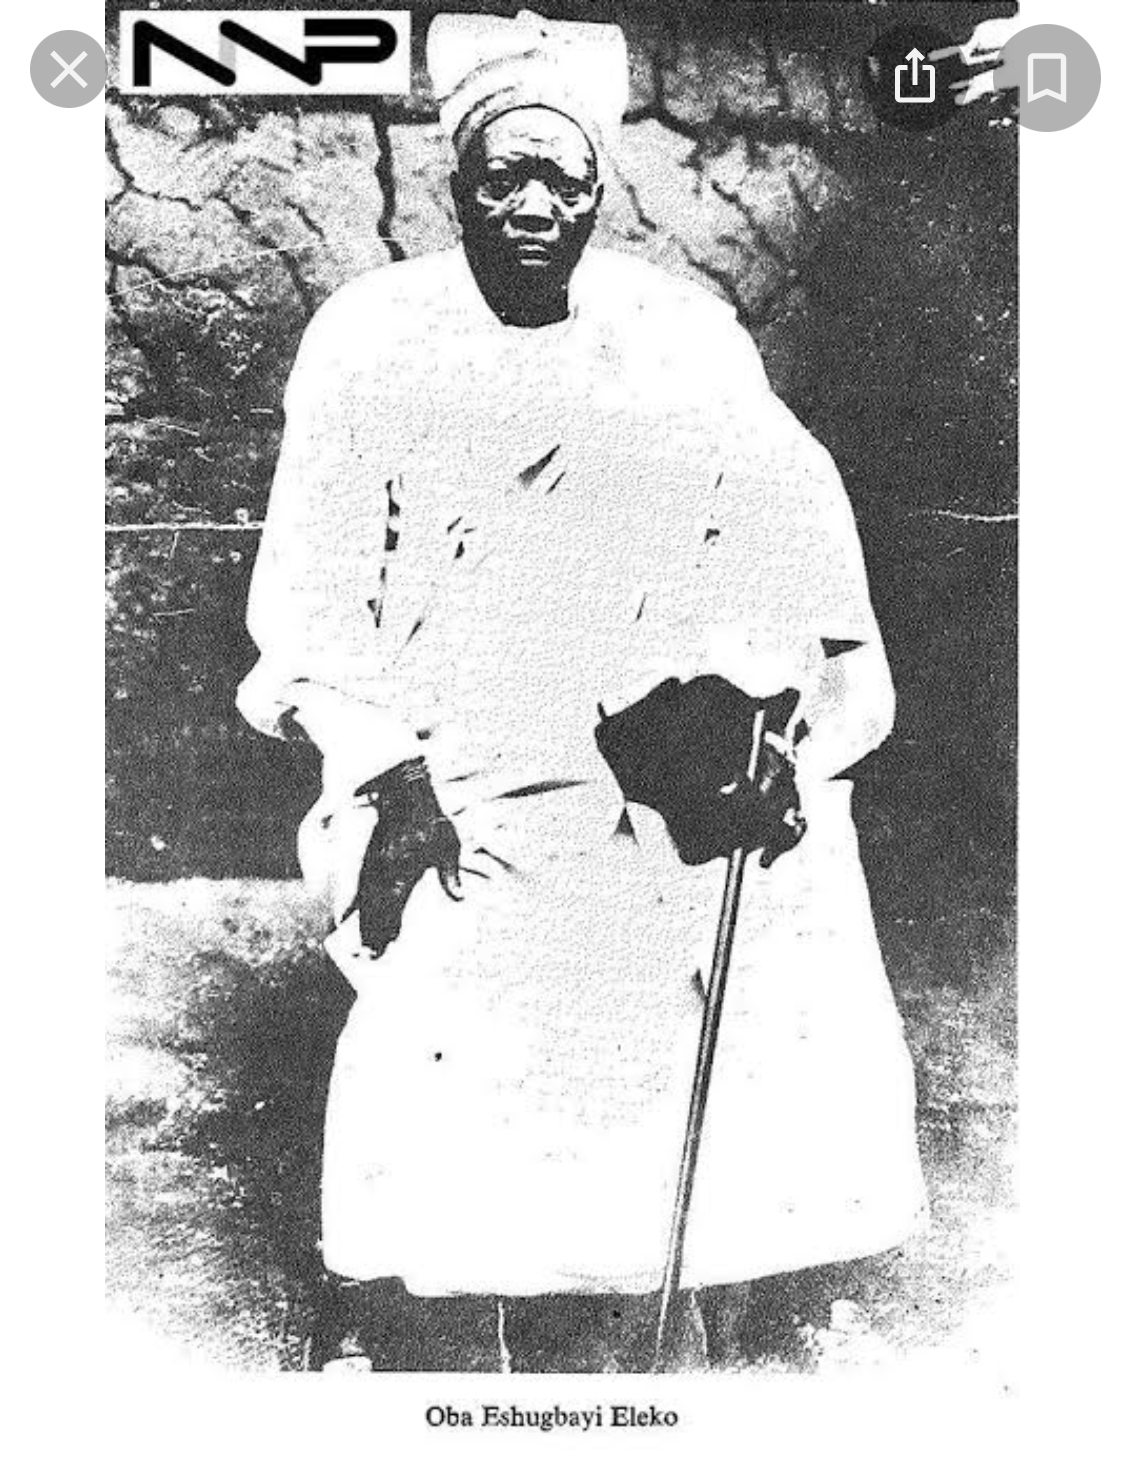 DATELINE LAGOS Tuesday 18th August 1925: Eleko goes into exile